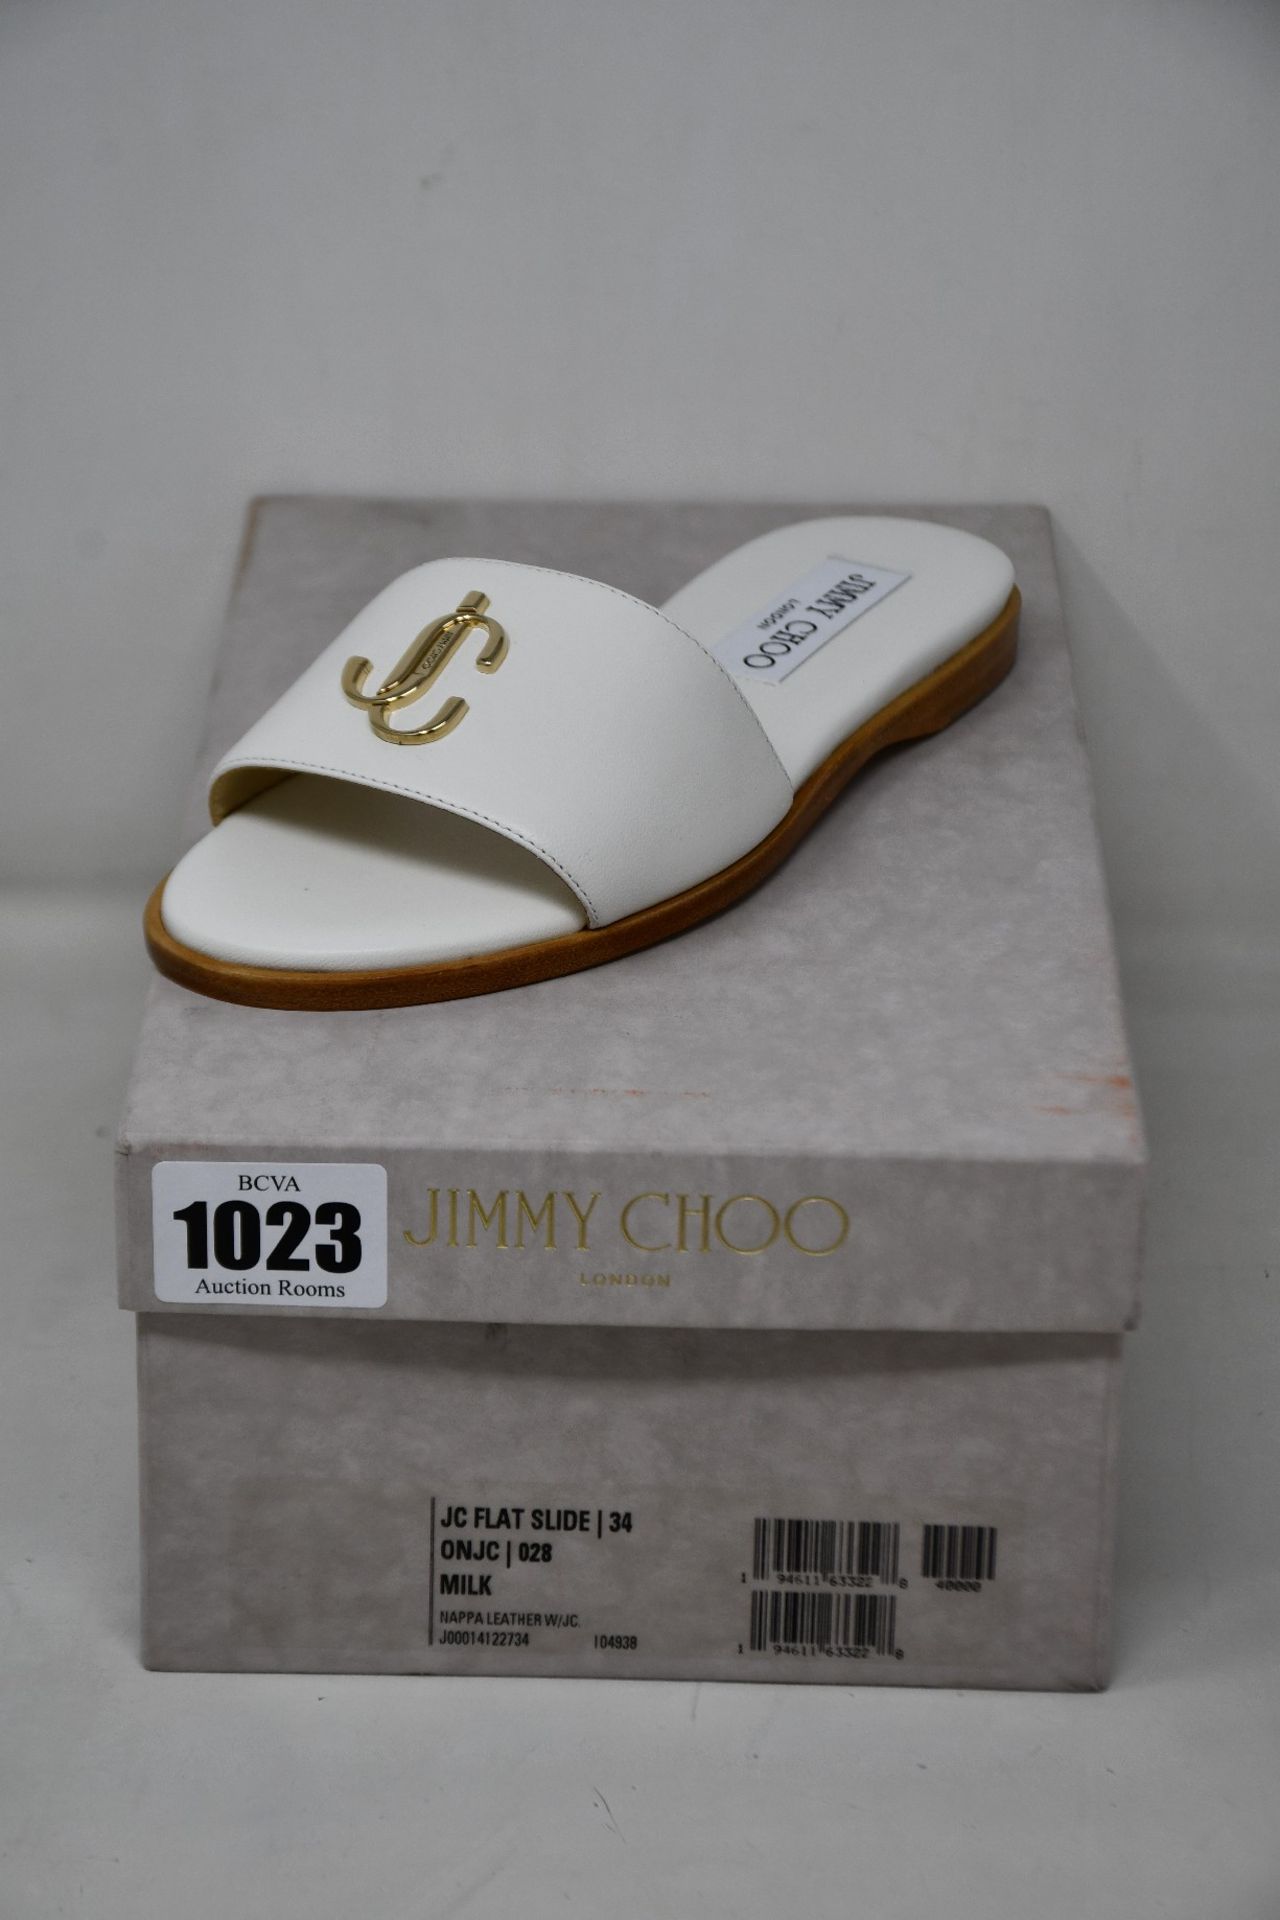 A pair of as new Jimmy Choo flat slide in milk (EU 34).